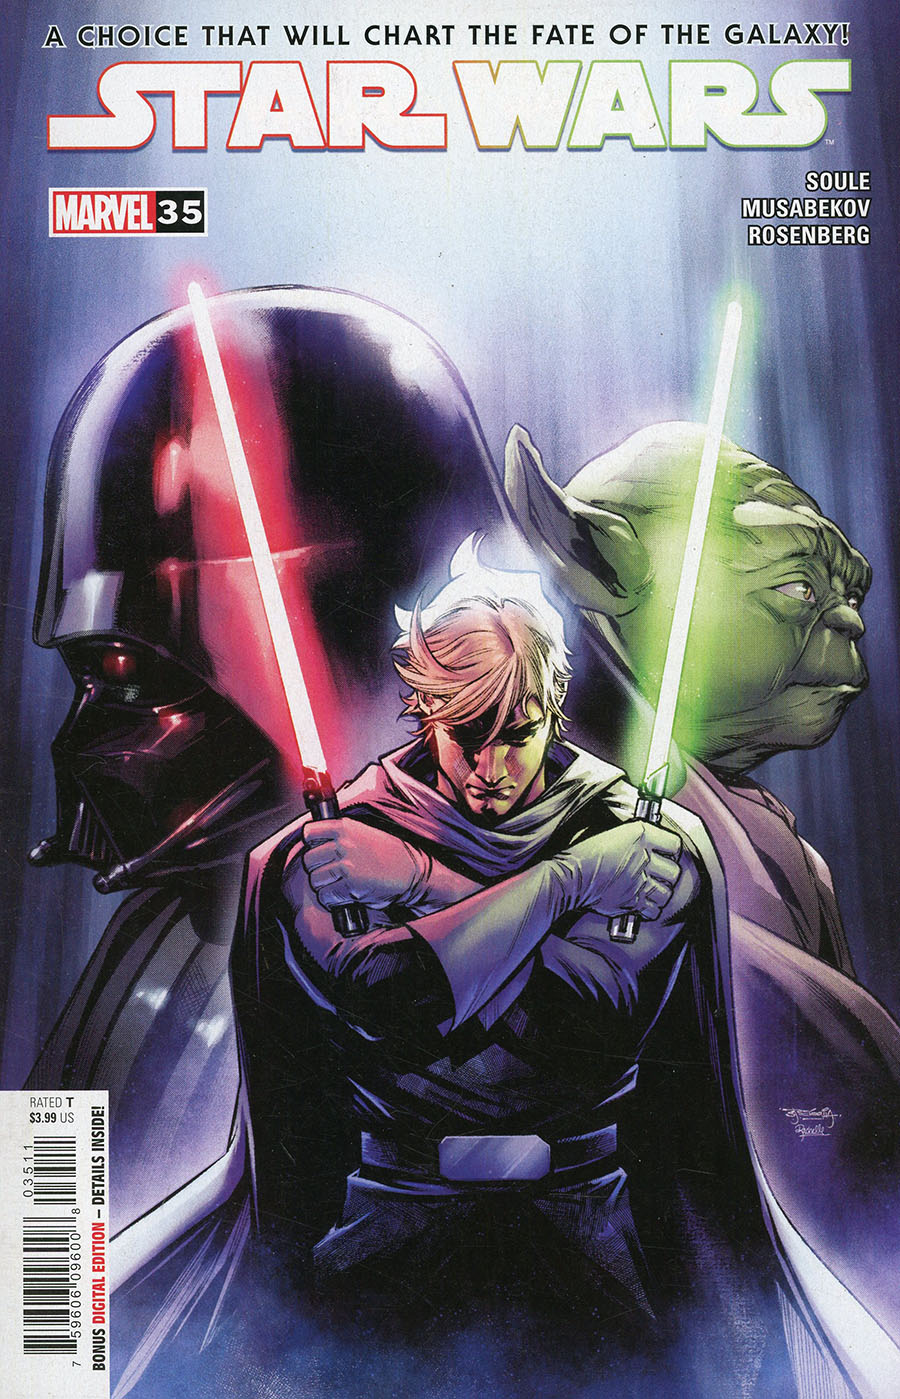 Star Wars Vol 5 #35 Cover A Regular Stephen Segovia Cover (Limit 1 Per Customer)